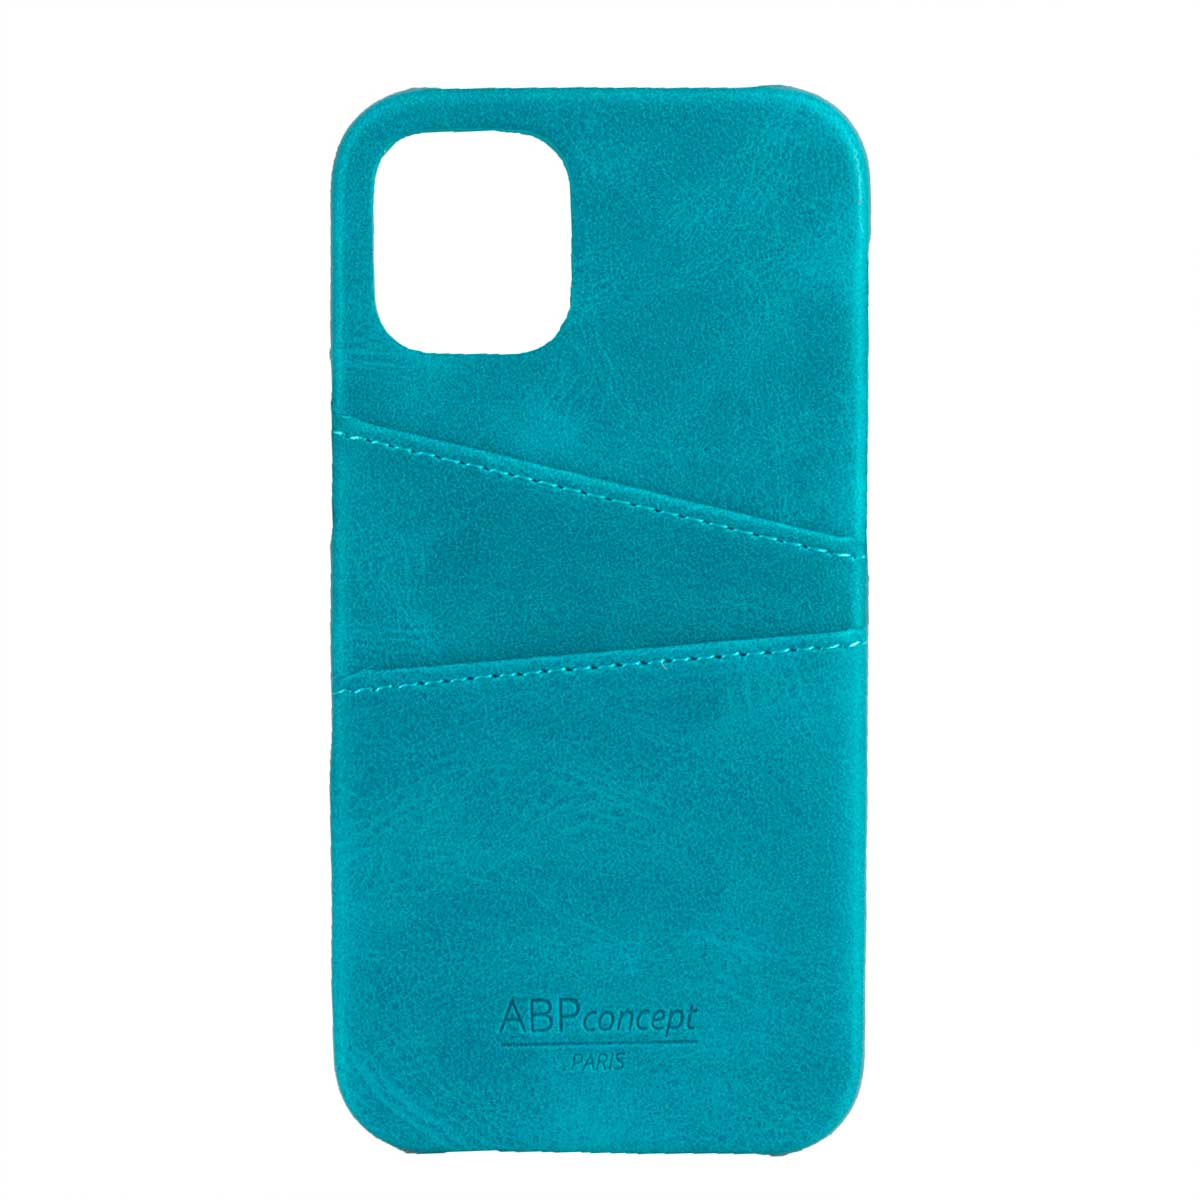 iPhone case / cover - iPhone 12 & 11 ( Pro / Max / Mini ) - Black, grey, blue, brown...